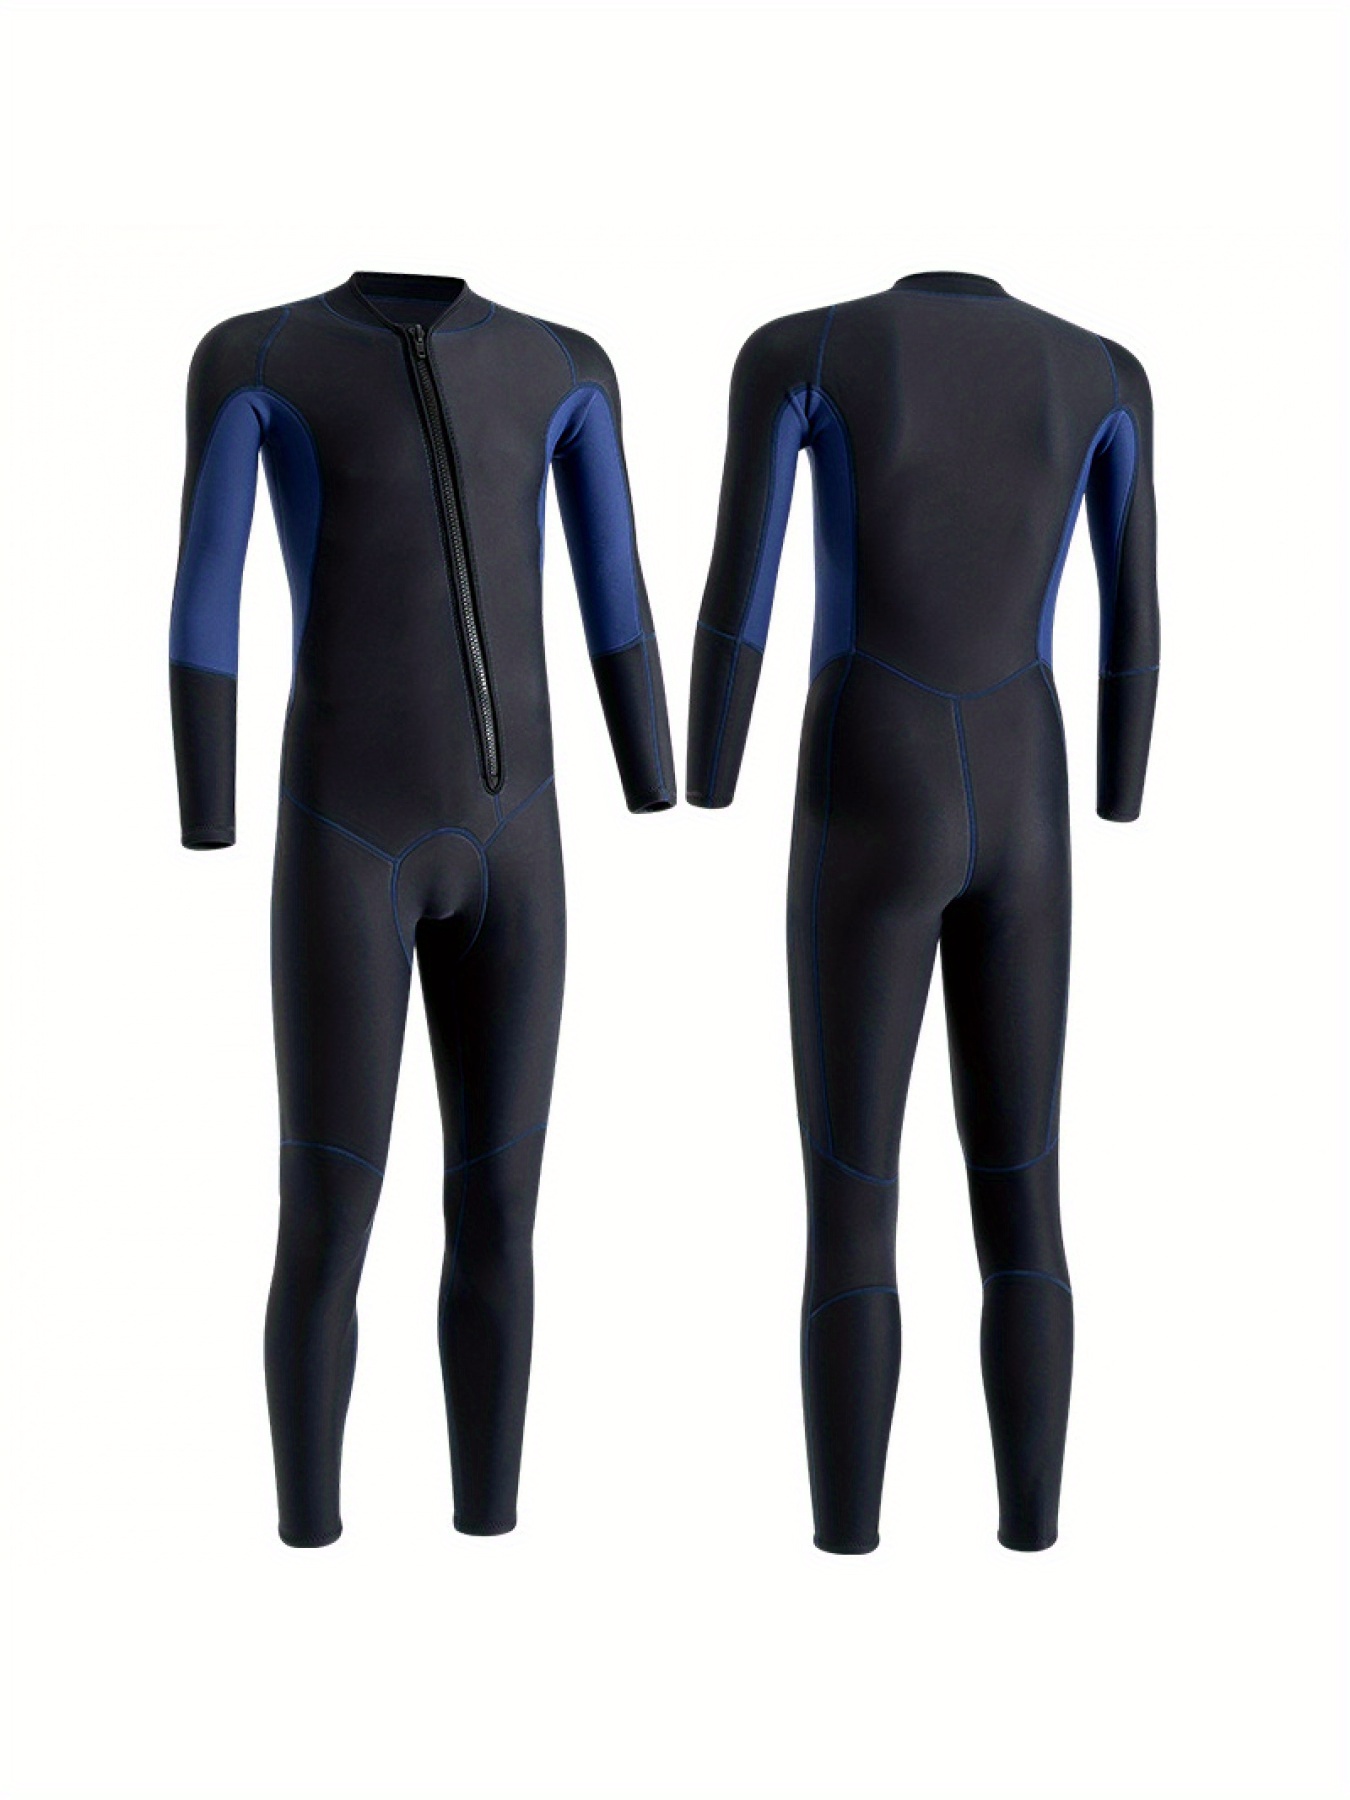 Realon Wetsuit Men 3mm Spearfishing Suit Camo Hoodie Scuba Diving